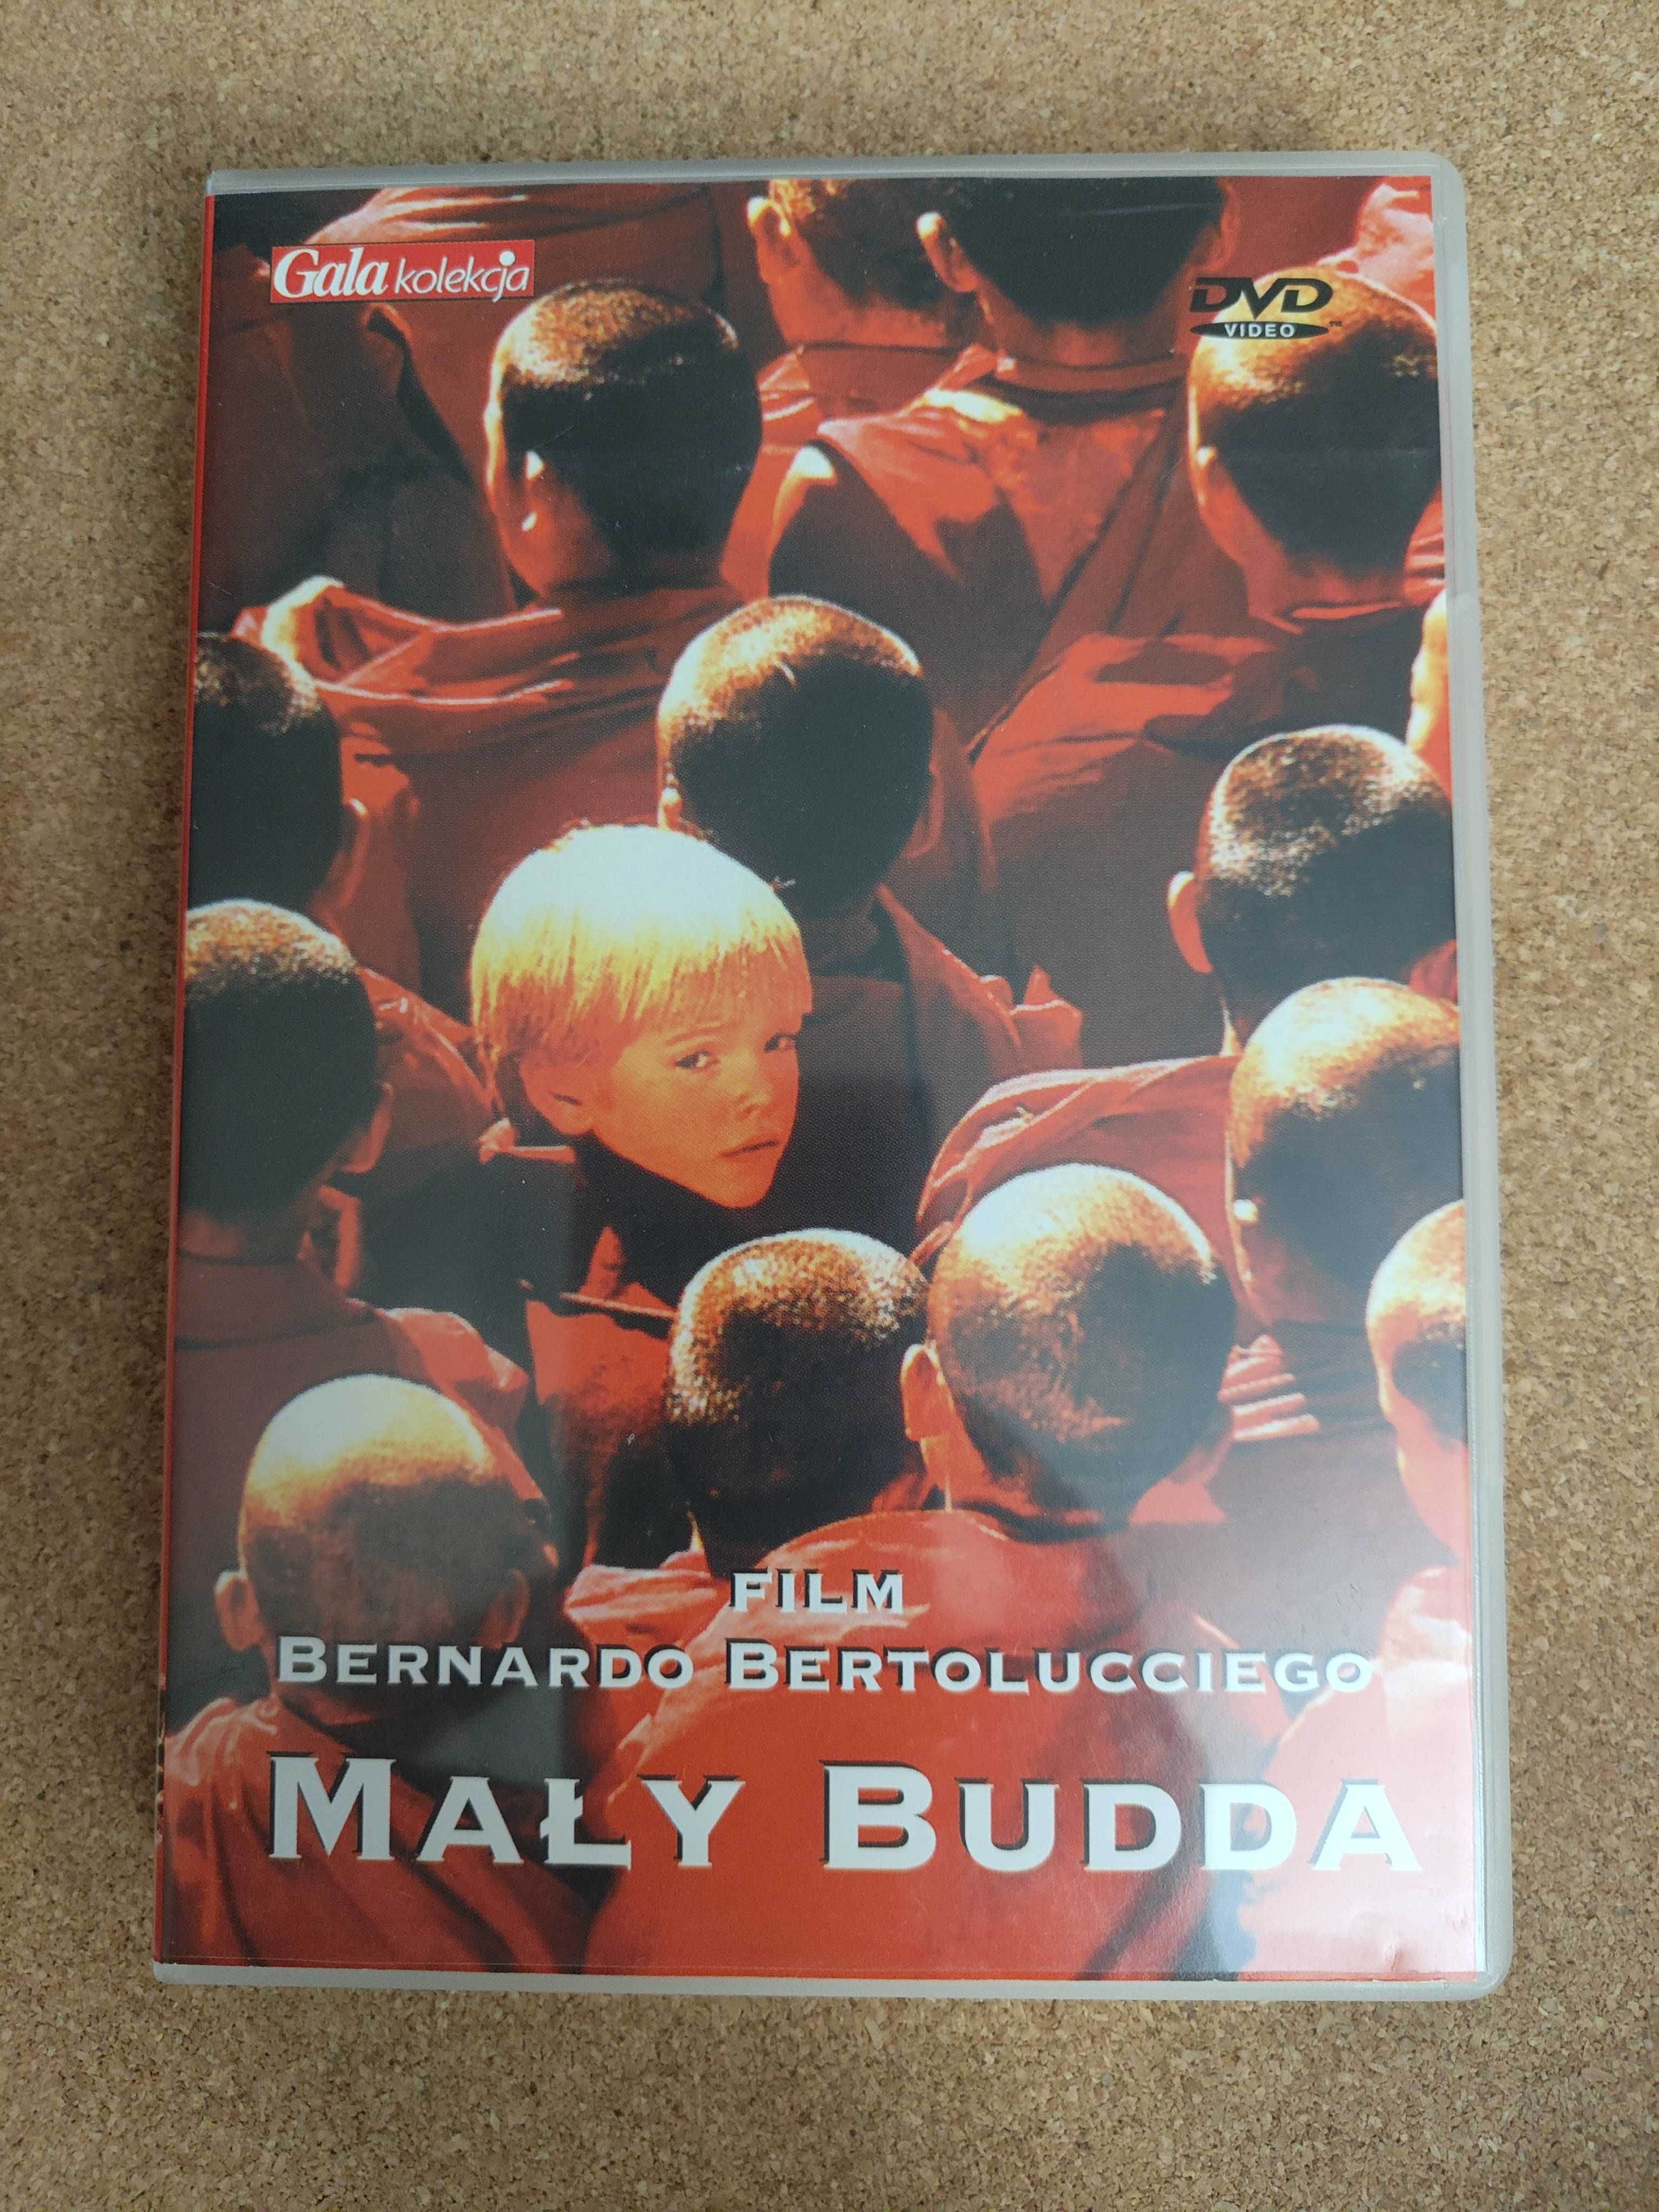 DVD "Mały Budda" Bernardo Bertolucci